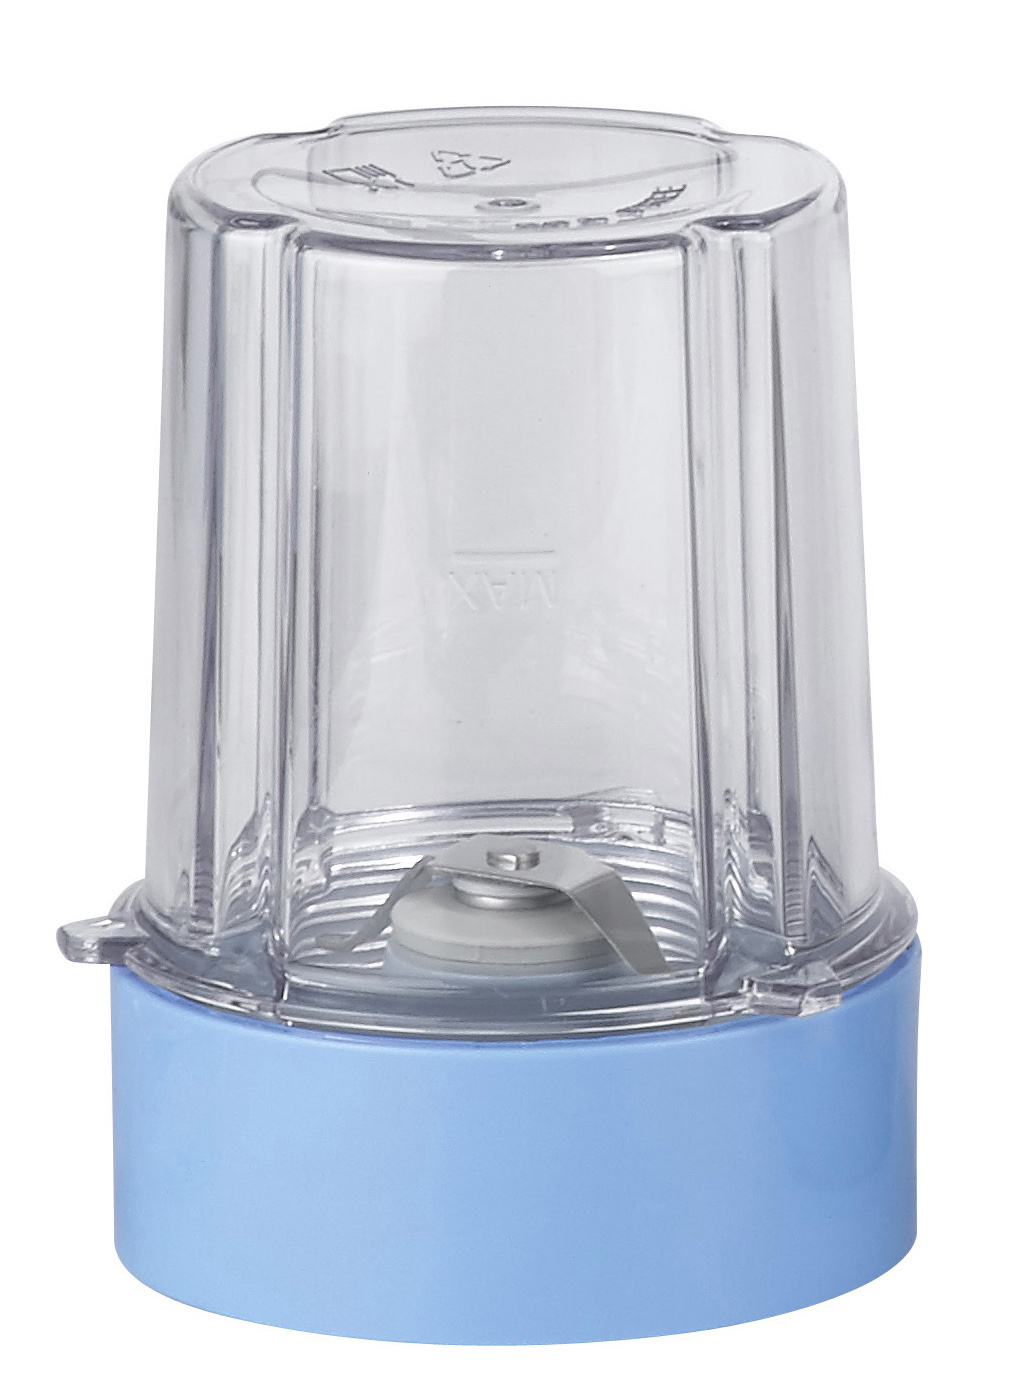 BLAUPUNKT TBP601BL Standmixer Blau/Grau Watt, 1.2 Liter) (700